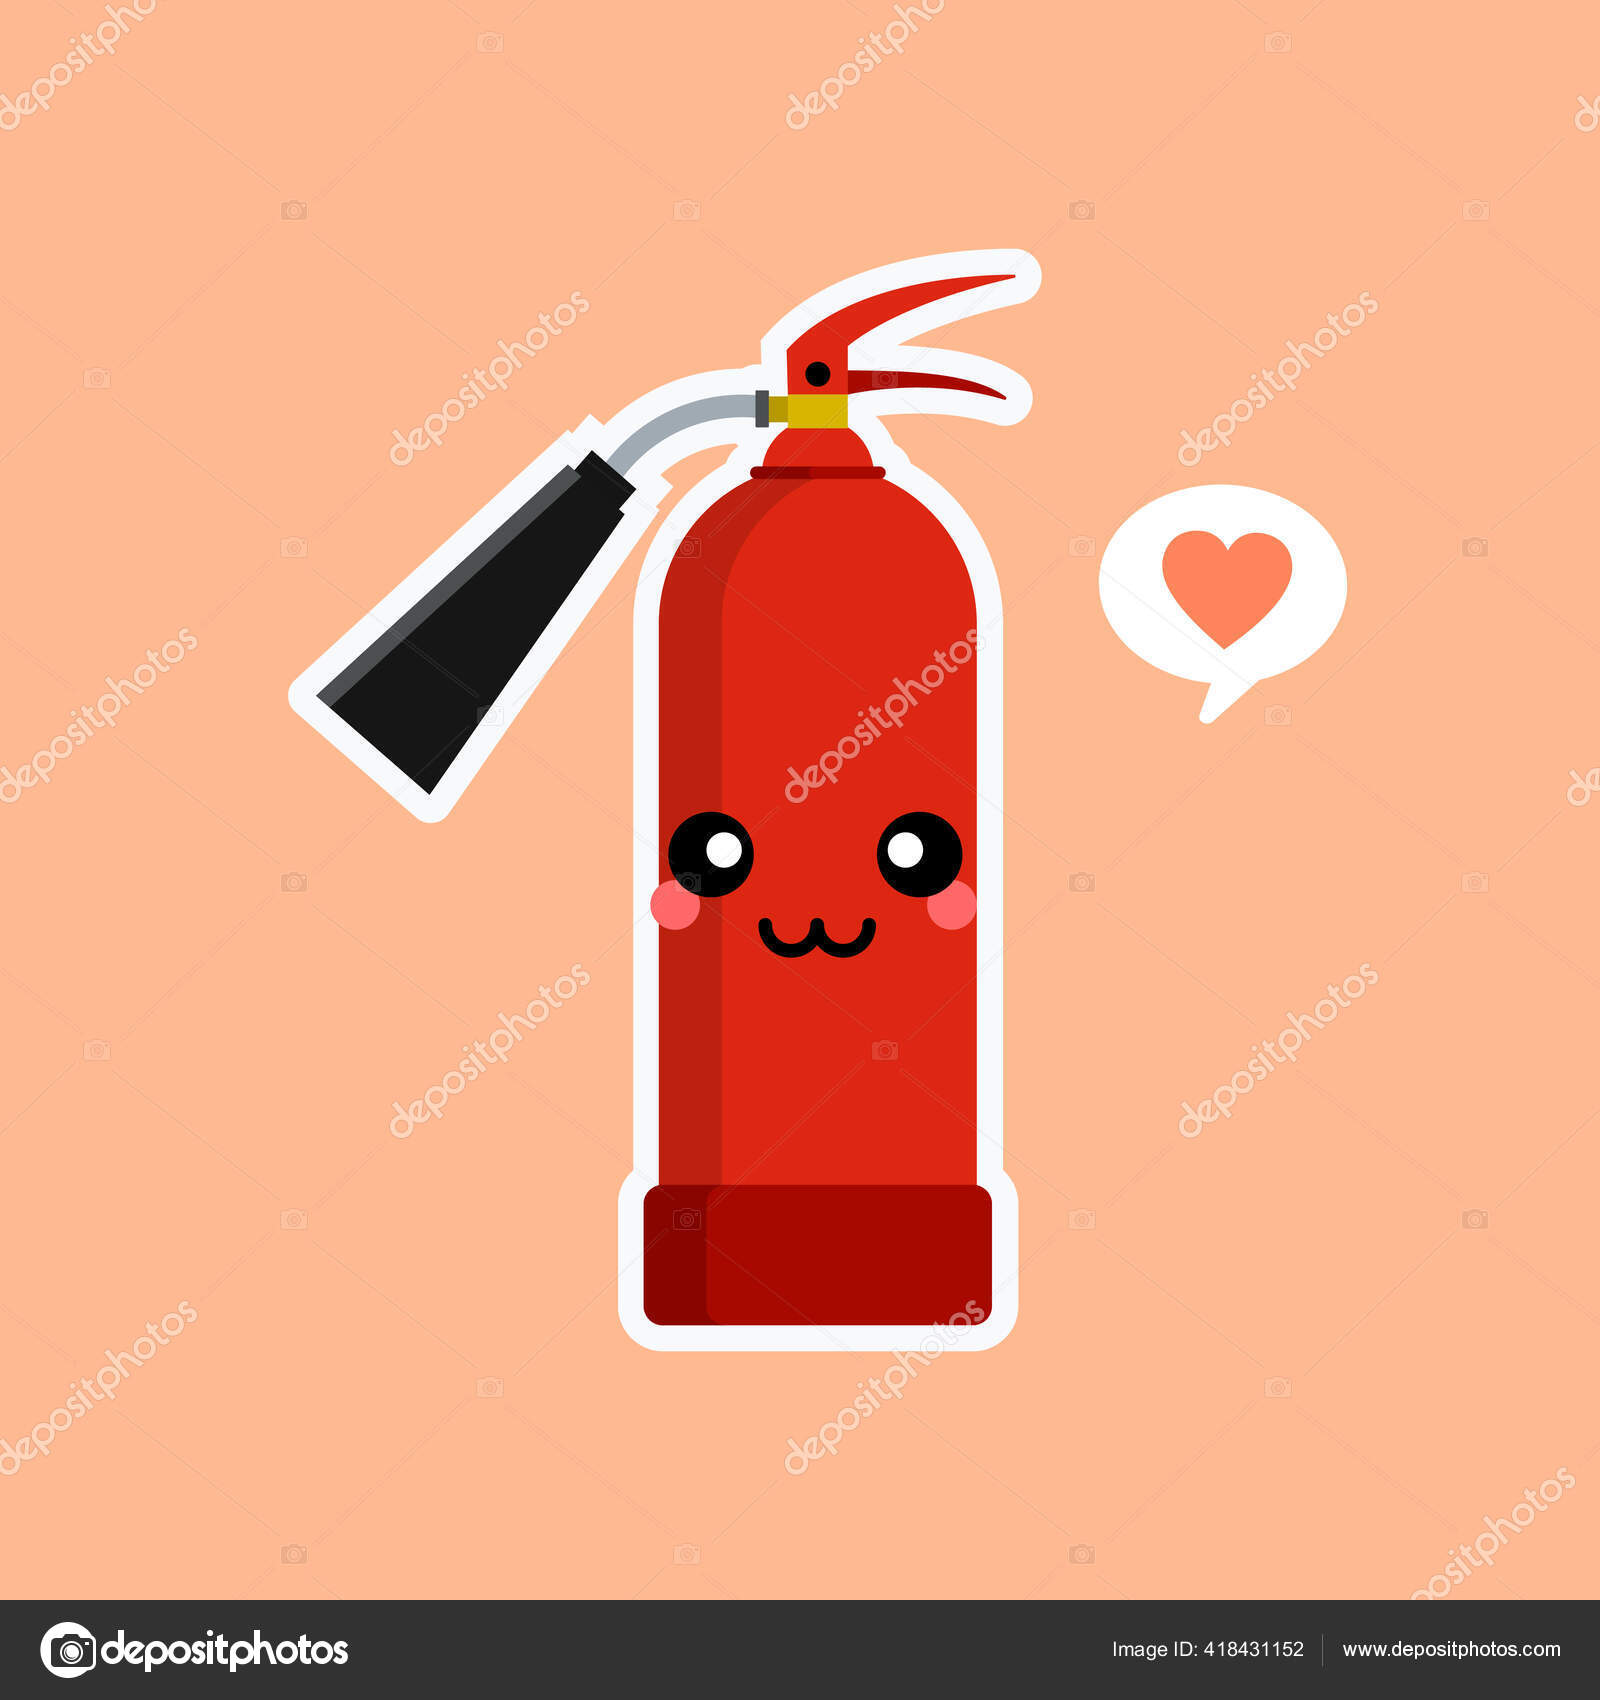 Emoticon de ícone de chama de fogo de desenho animado aceso sinal